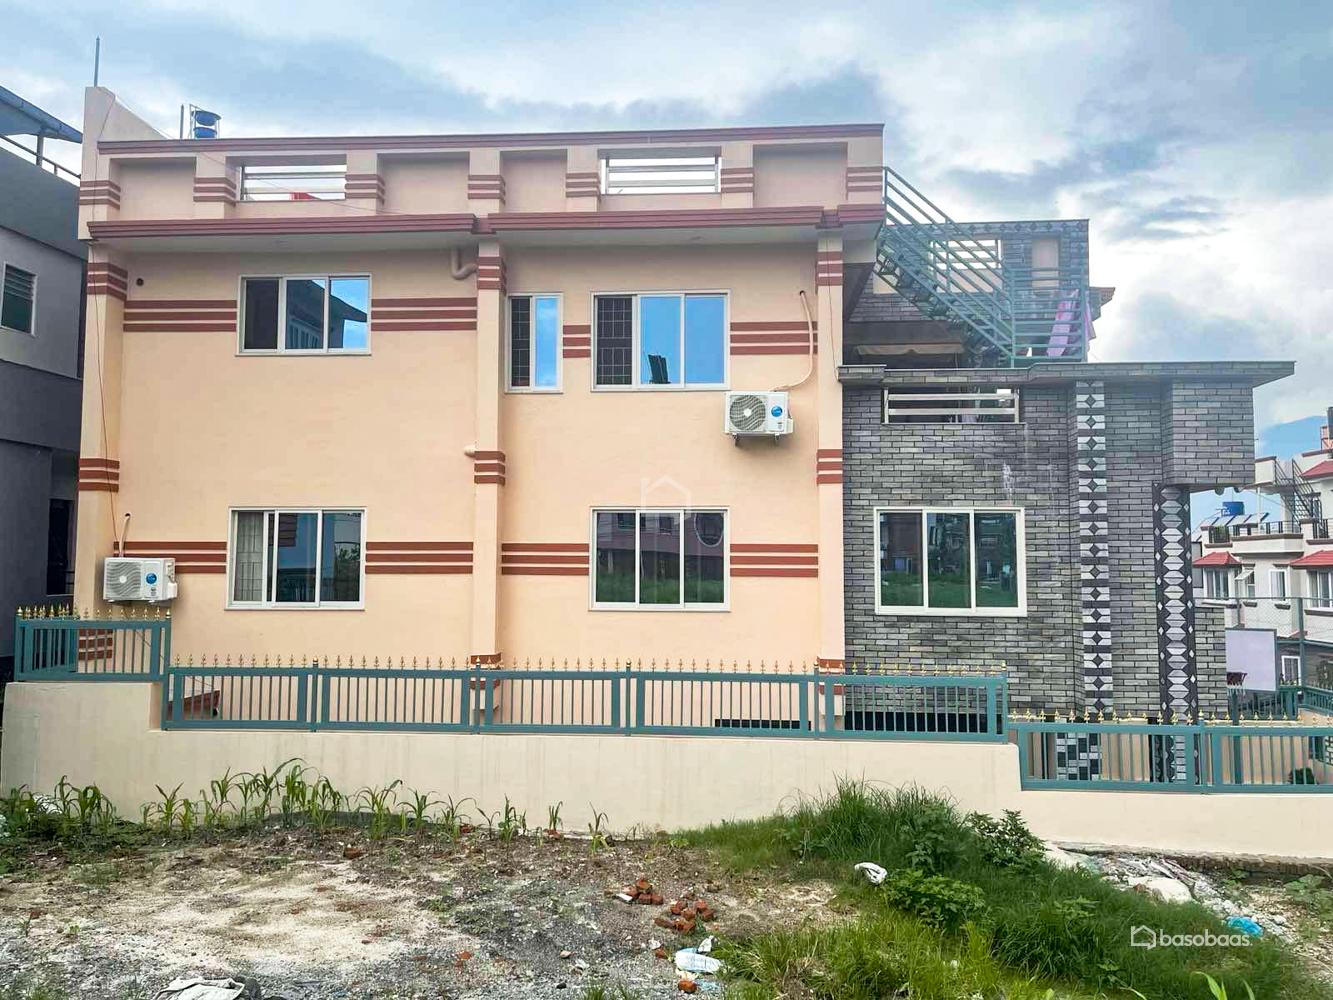 NEWLY BUILT RESIDENTIAL : House for Sale in Dhapasi, Kathmandu Image 10